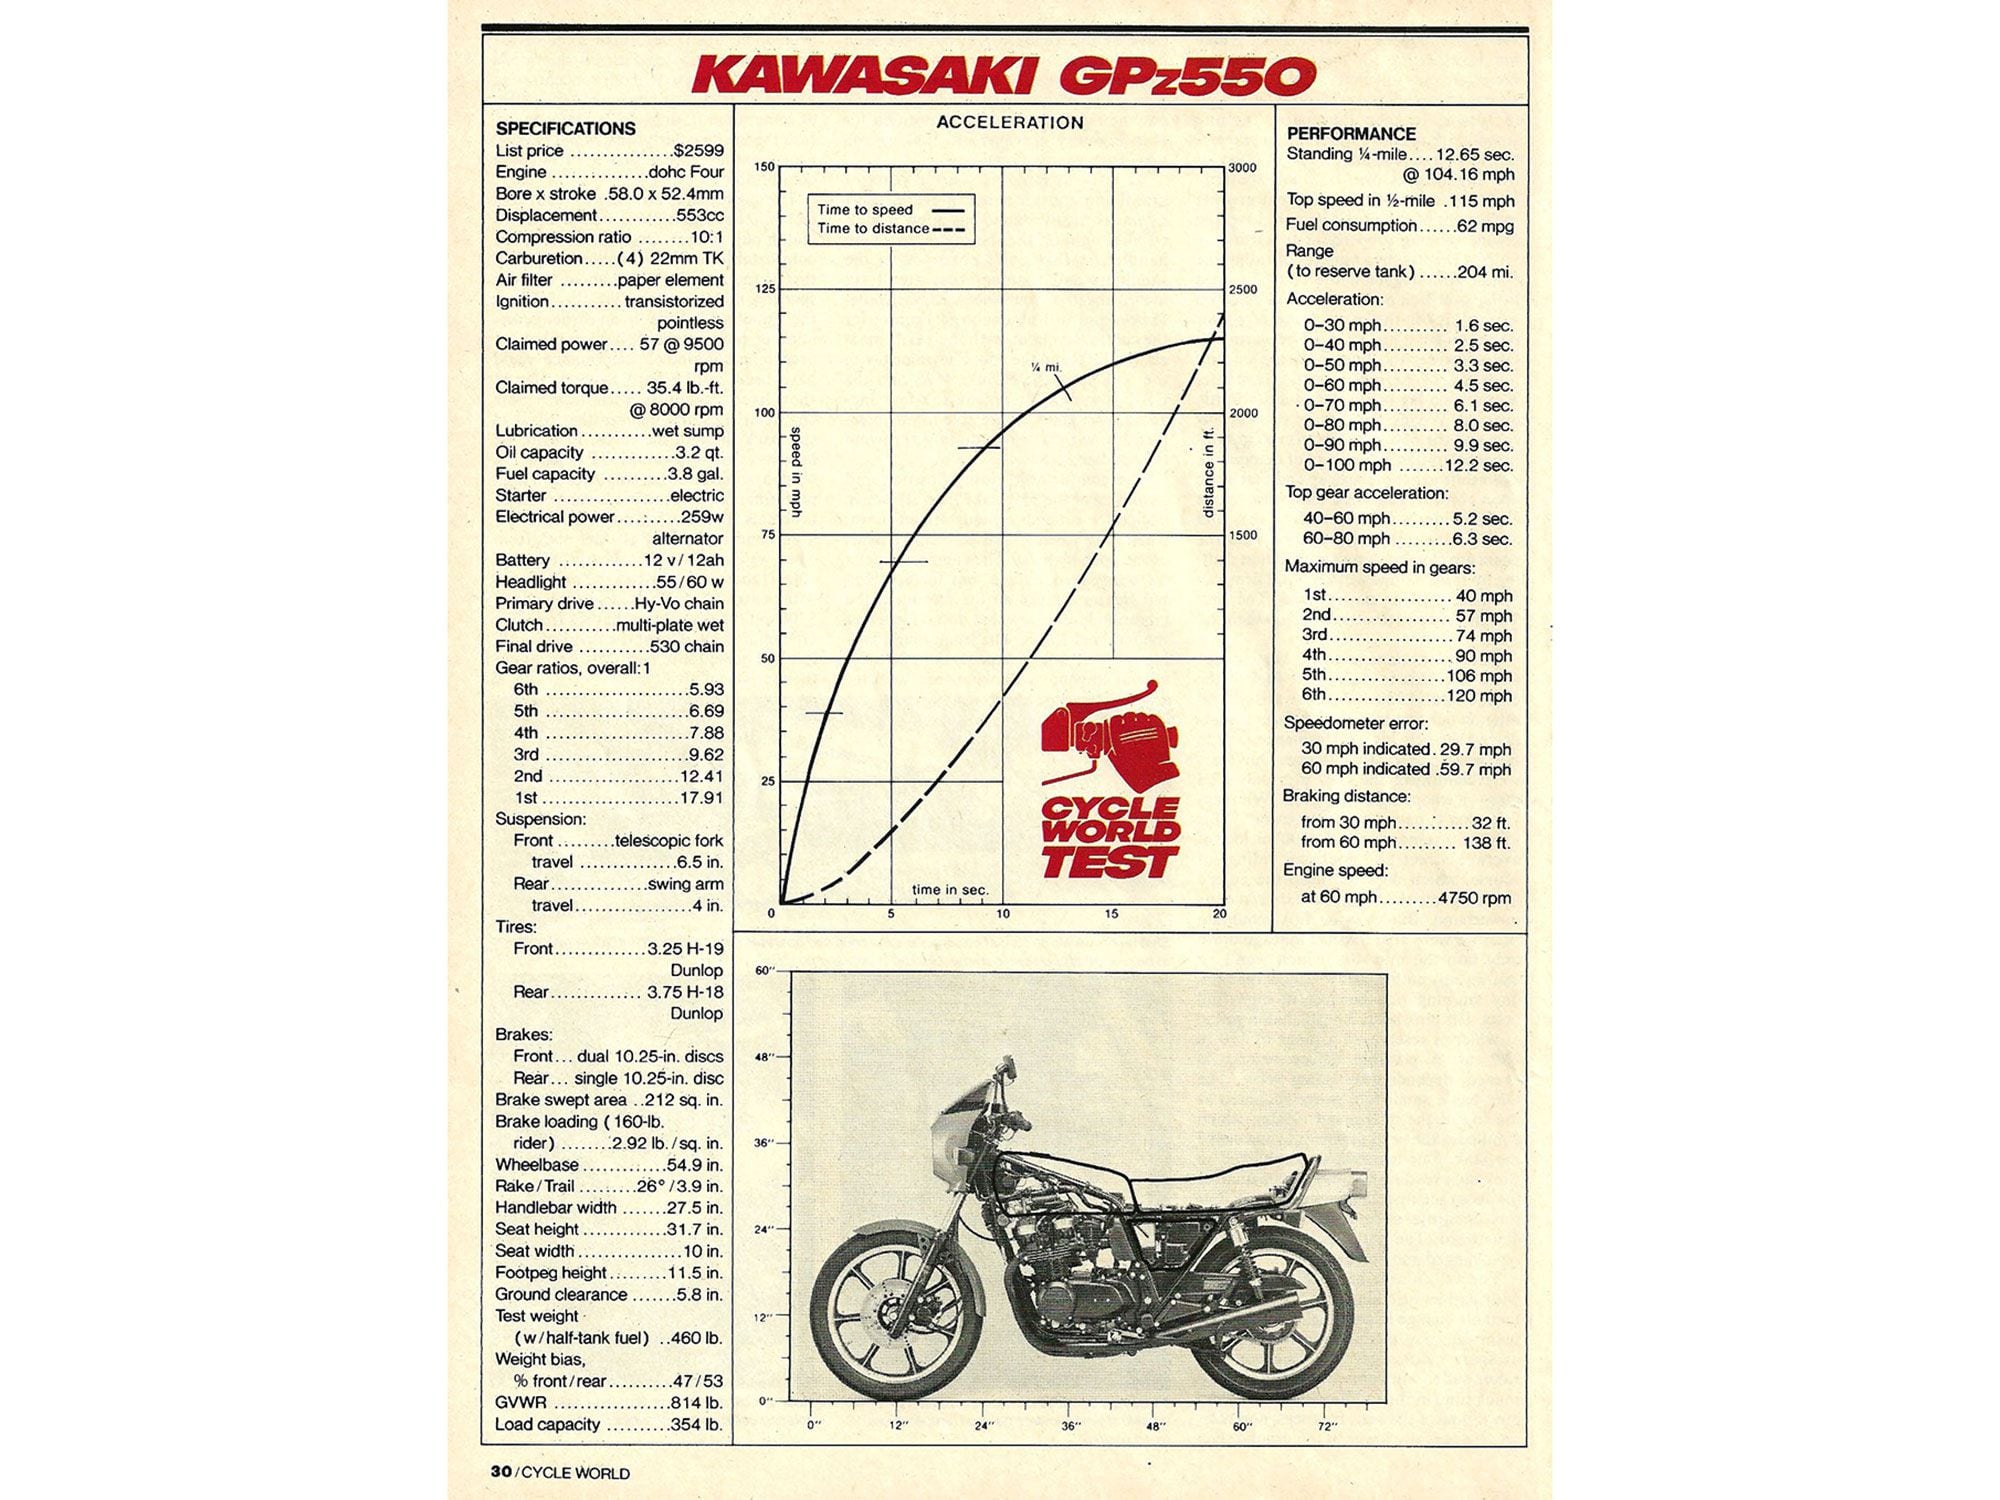 1981 Kawasaki GPz 550 road test